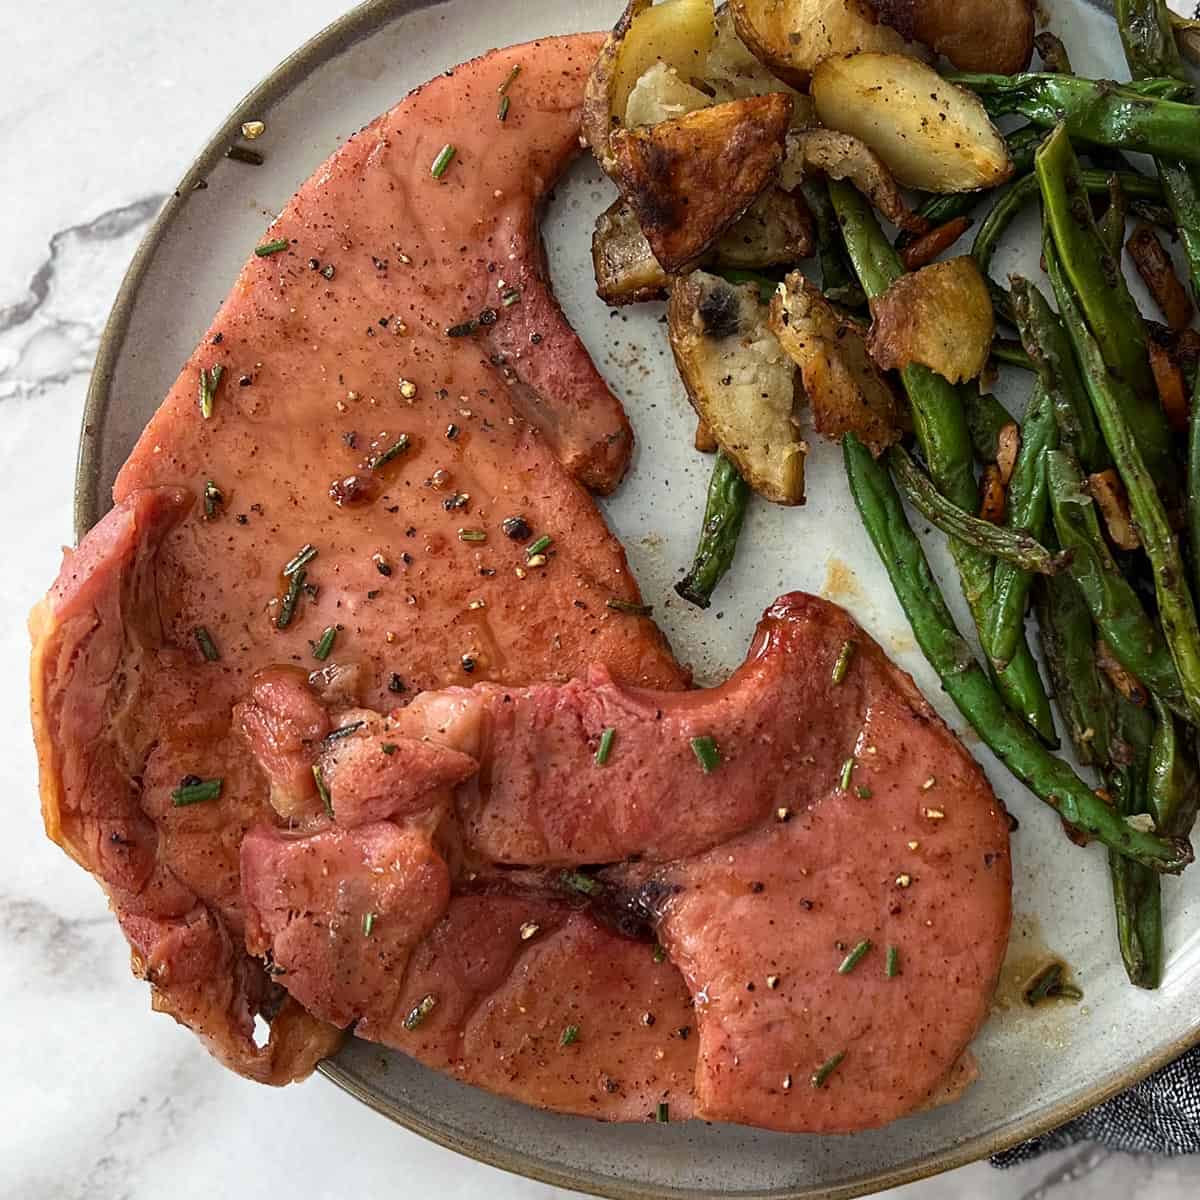 two glazed ham steaks on a dinner plate